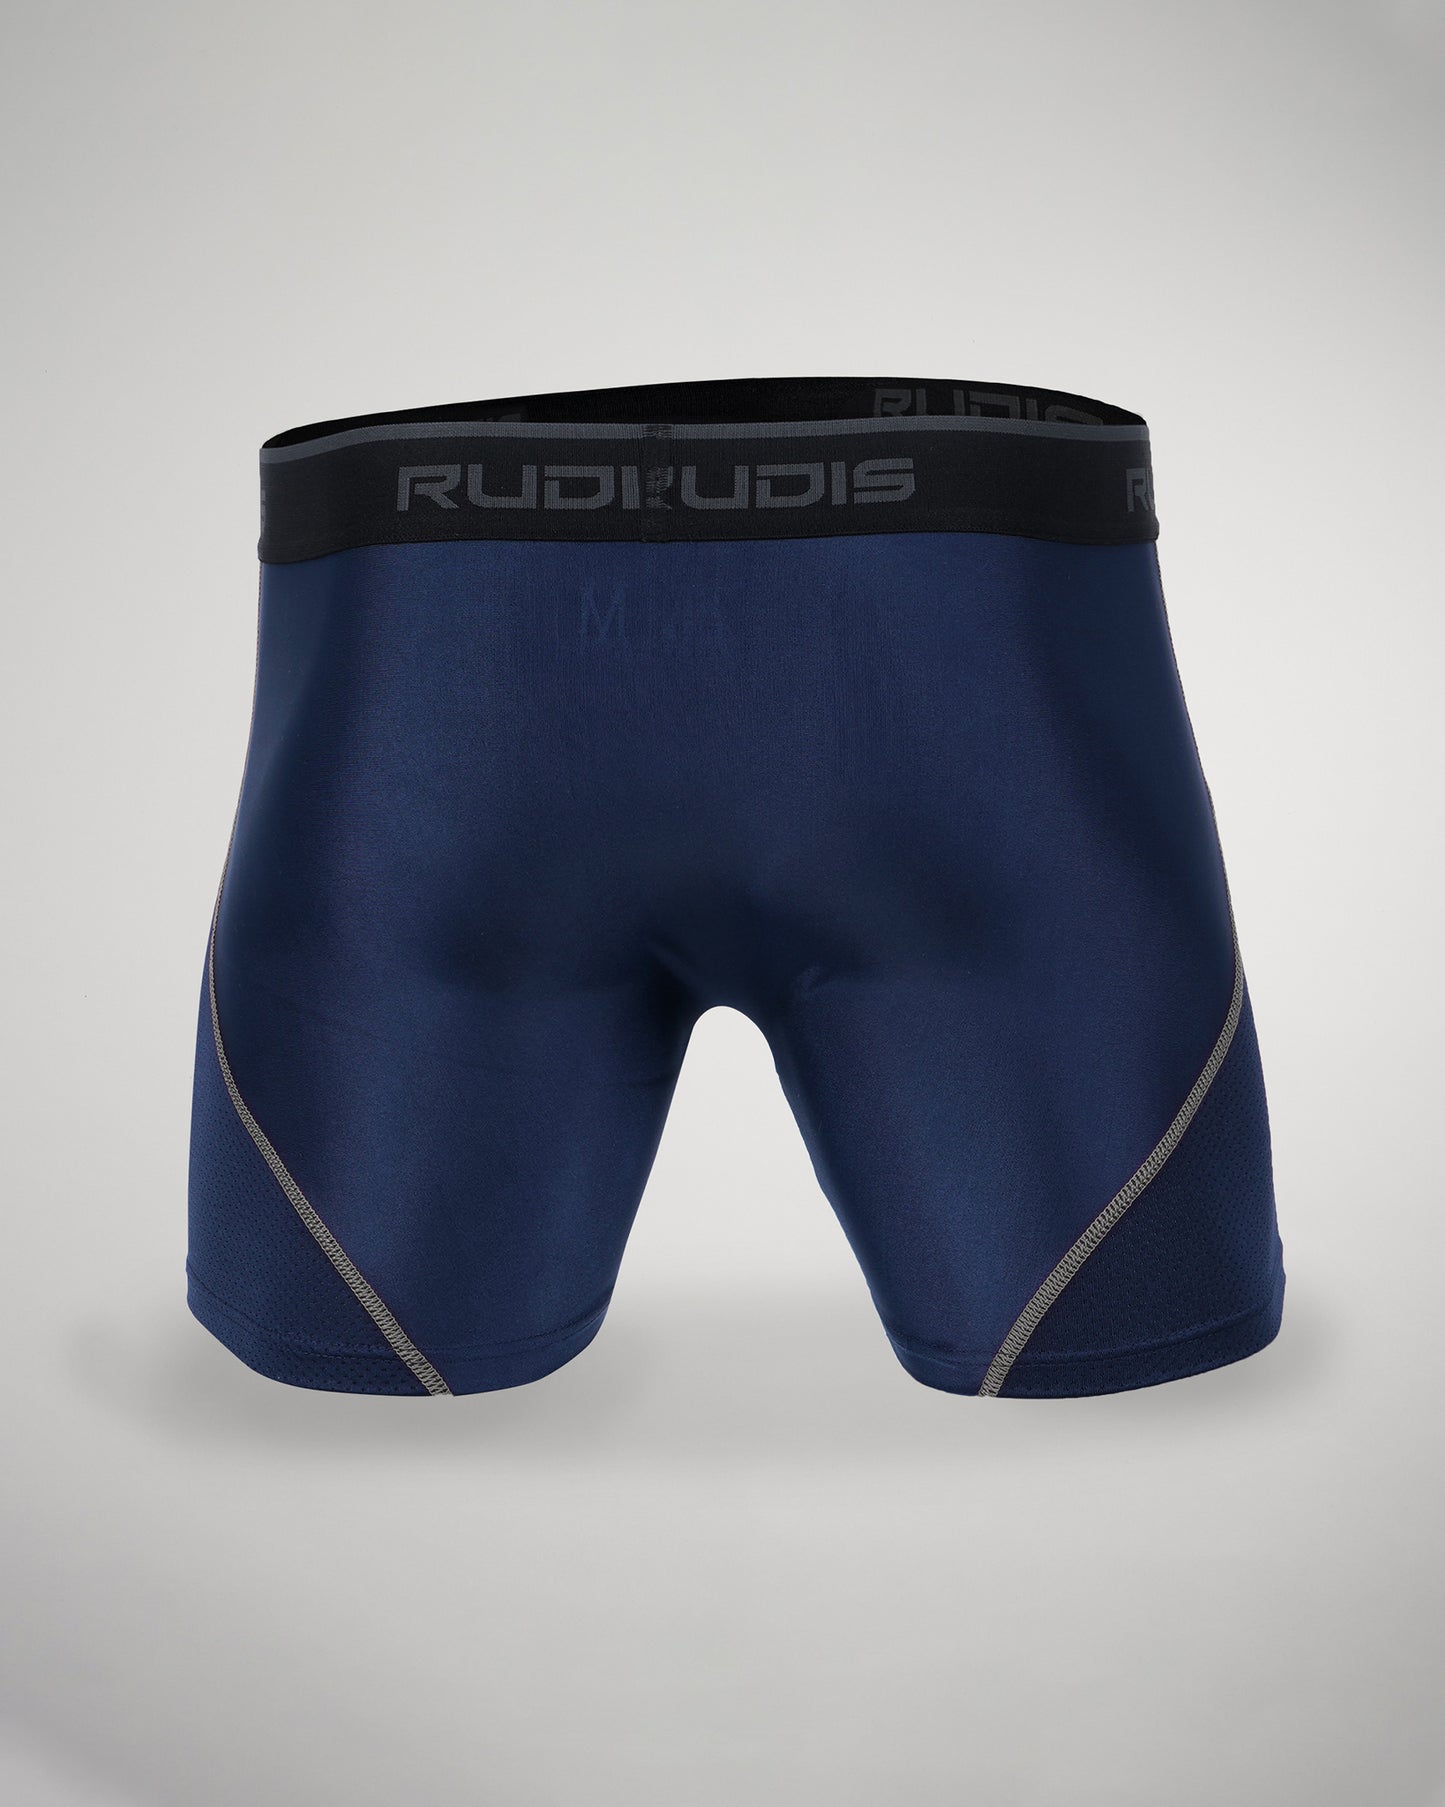 RUDIS Essential Navy/Gray Adult Boxer Brief